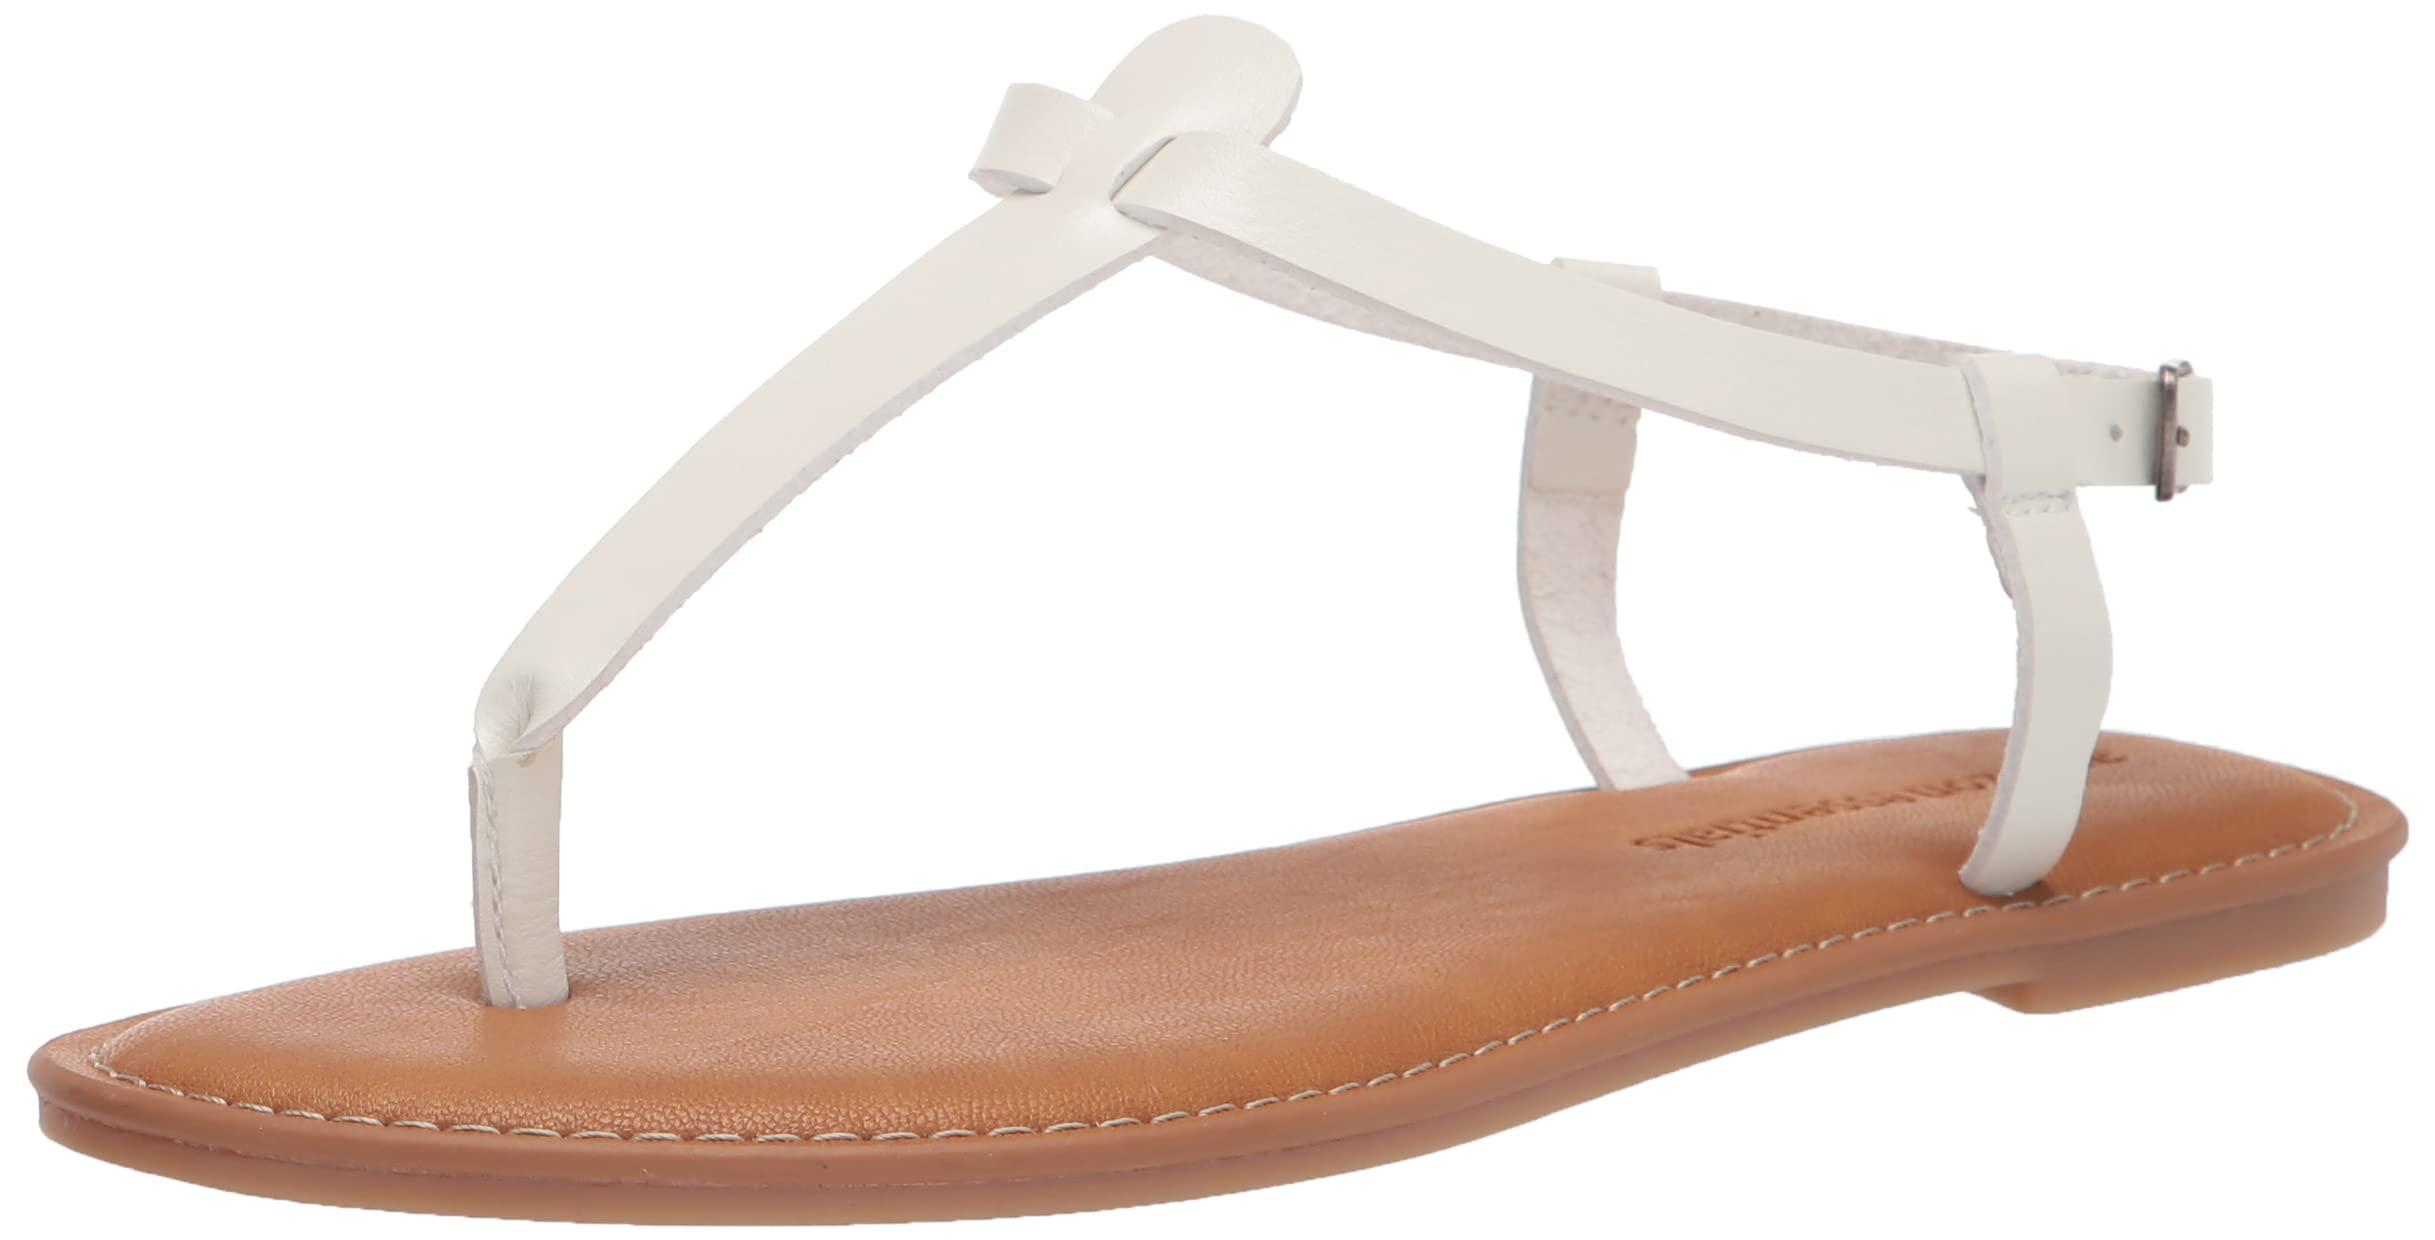 Essentials Shogun Casual Strappy Sandal Sandalia plana Mujer